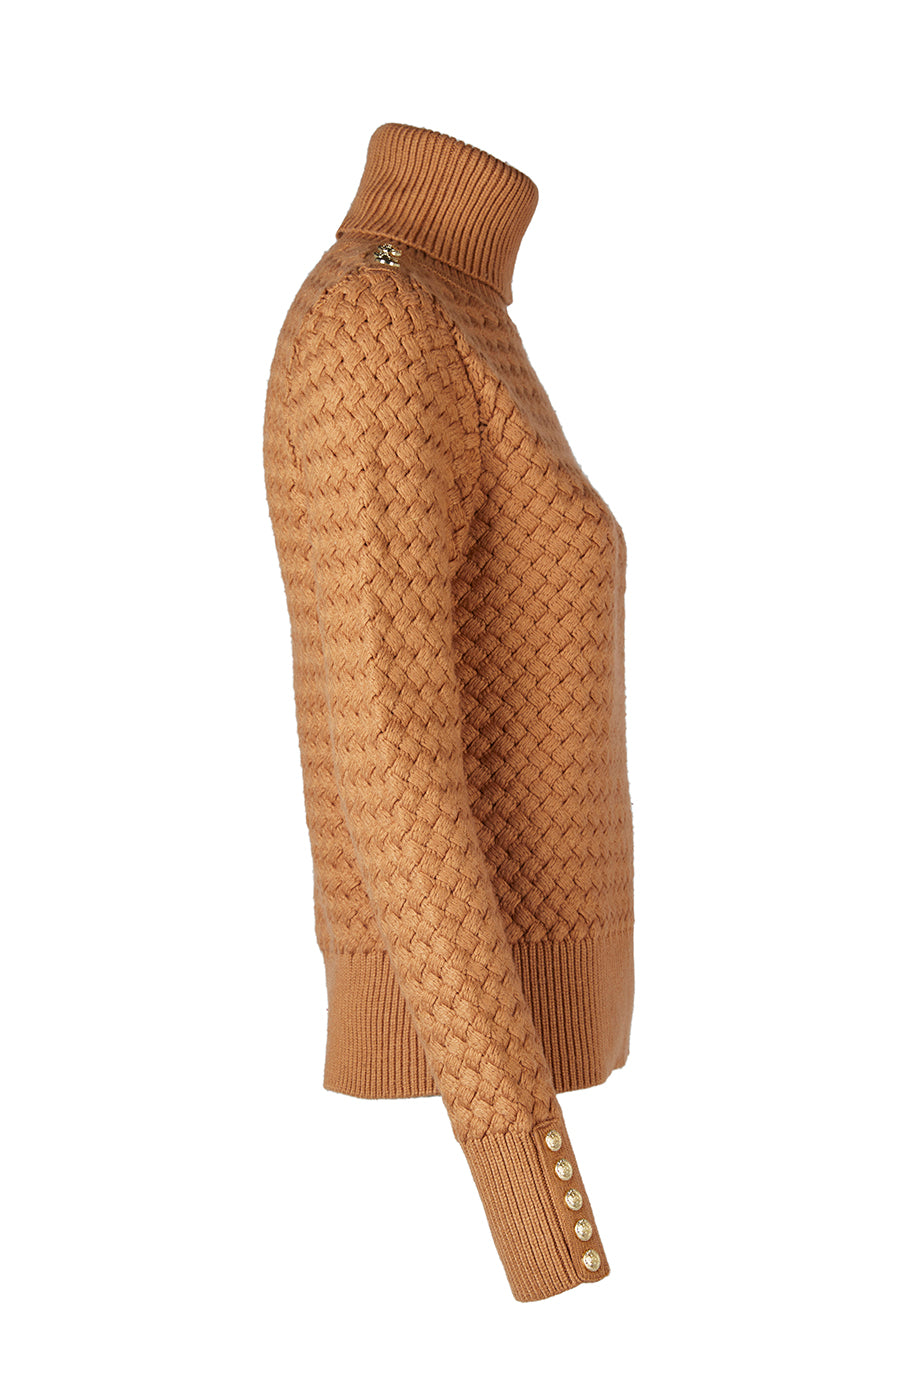 sife of womens lightweight roll neck basket weave knit jumper in caramel